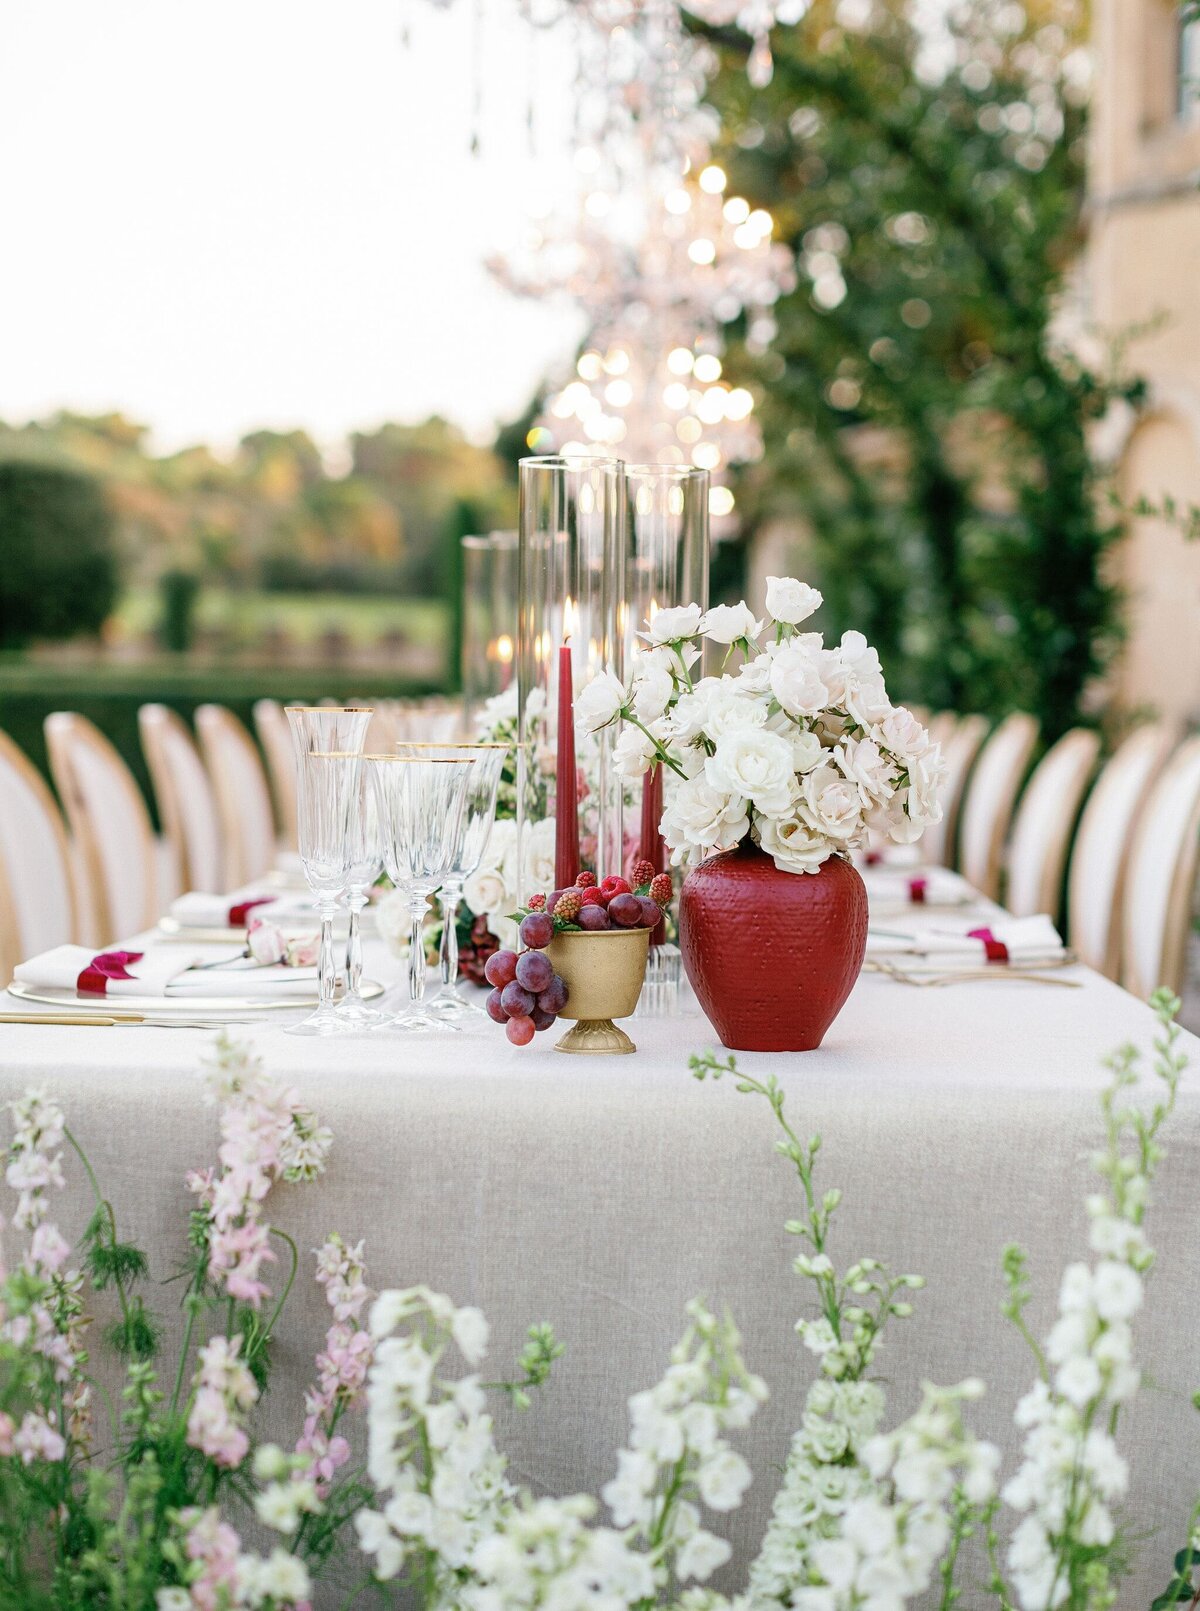 Luxury-wedding-table-details-florals